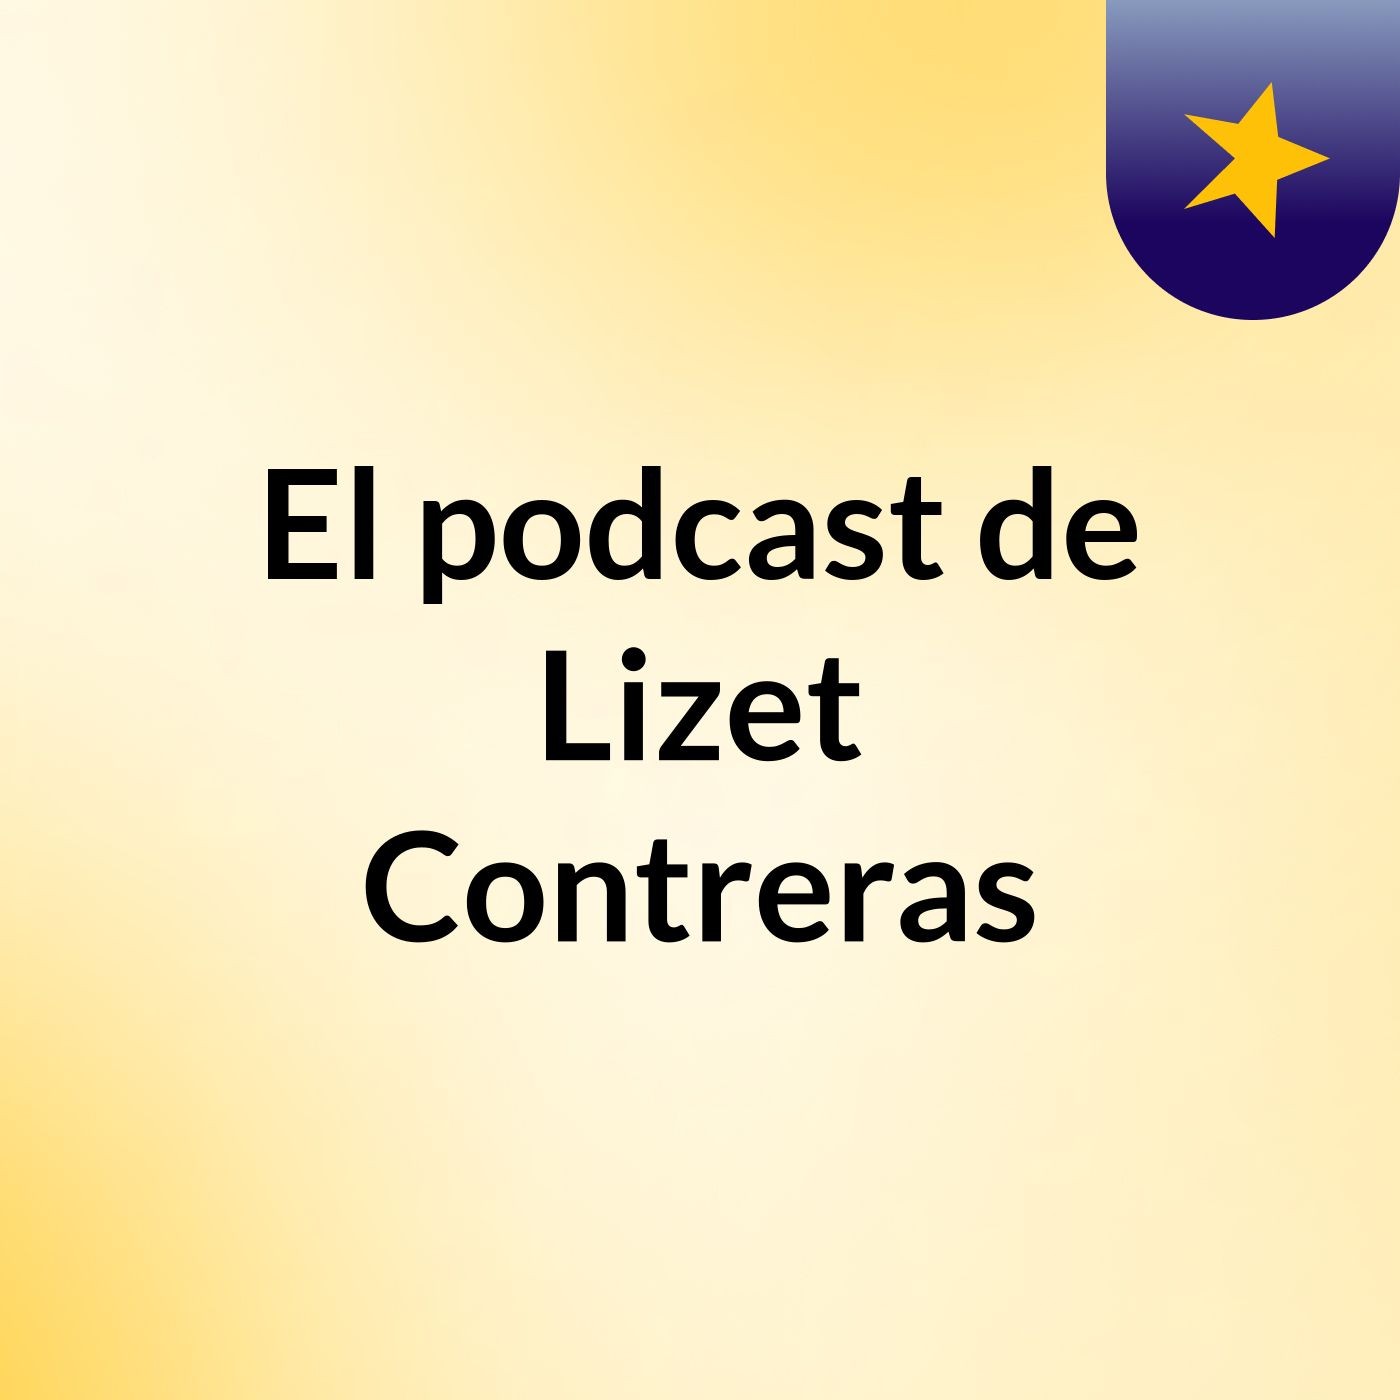 Episodio 2 - El podcast de Lizet Contreras